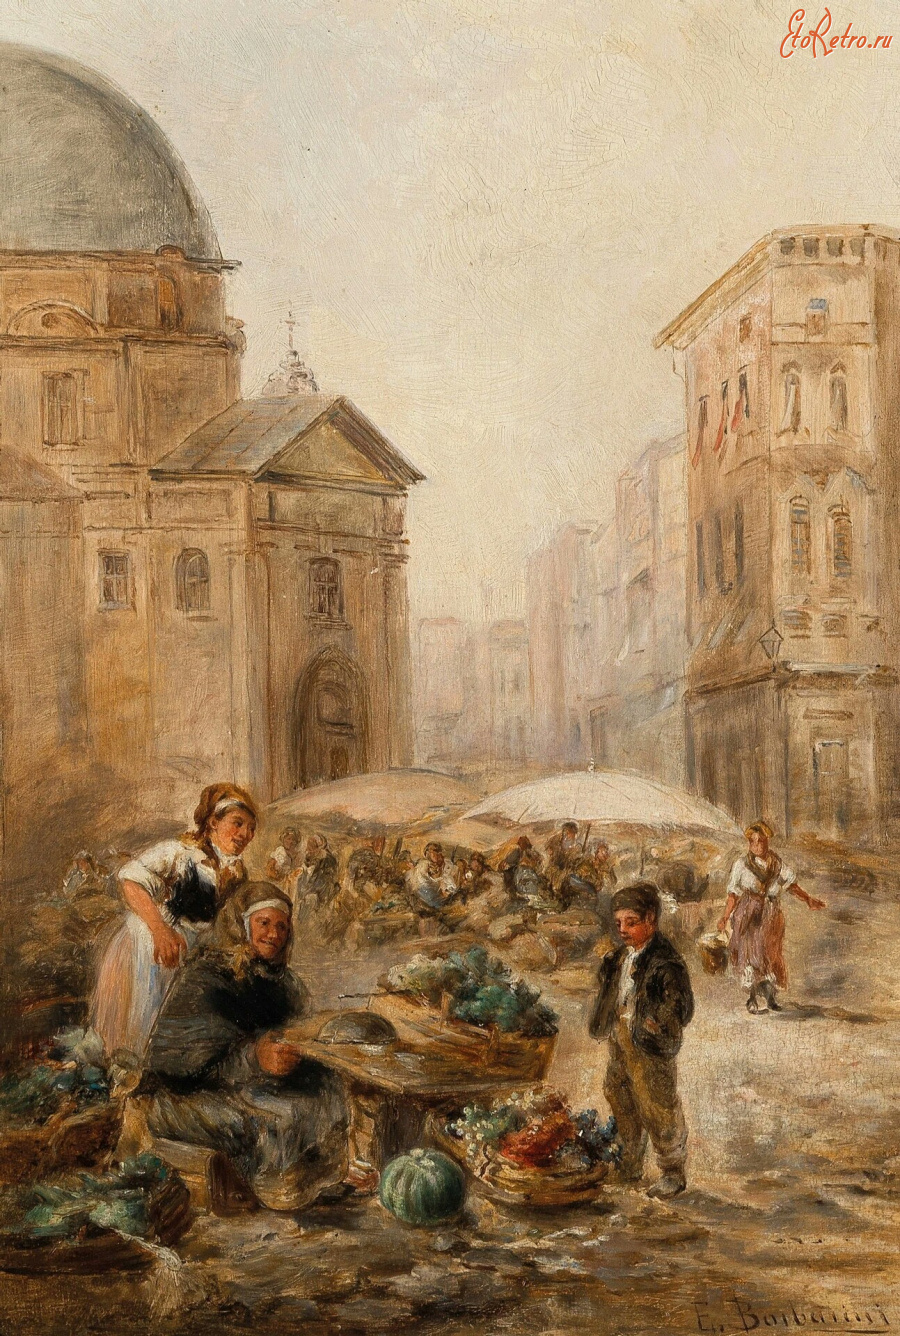 Картины - Эмиль Барбарини. Сцена на рынке